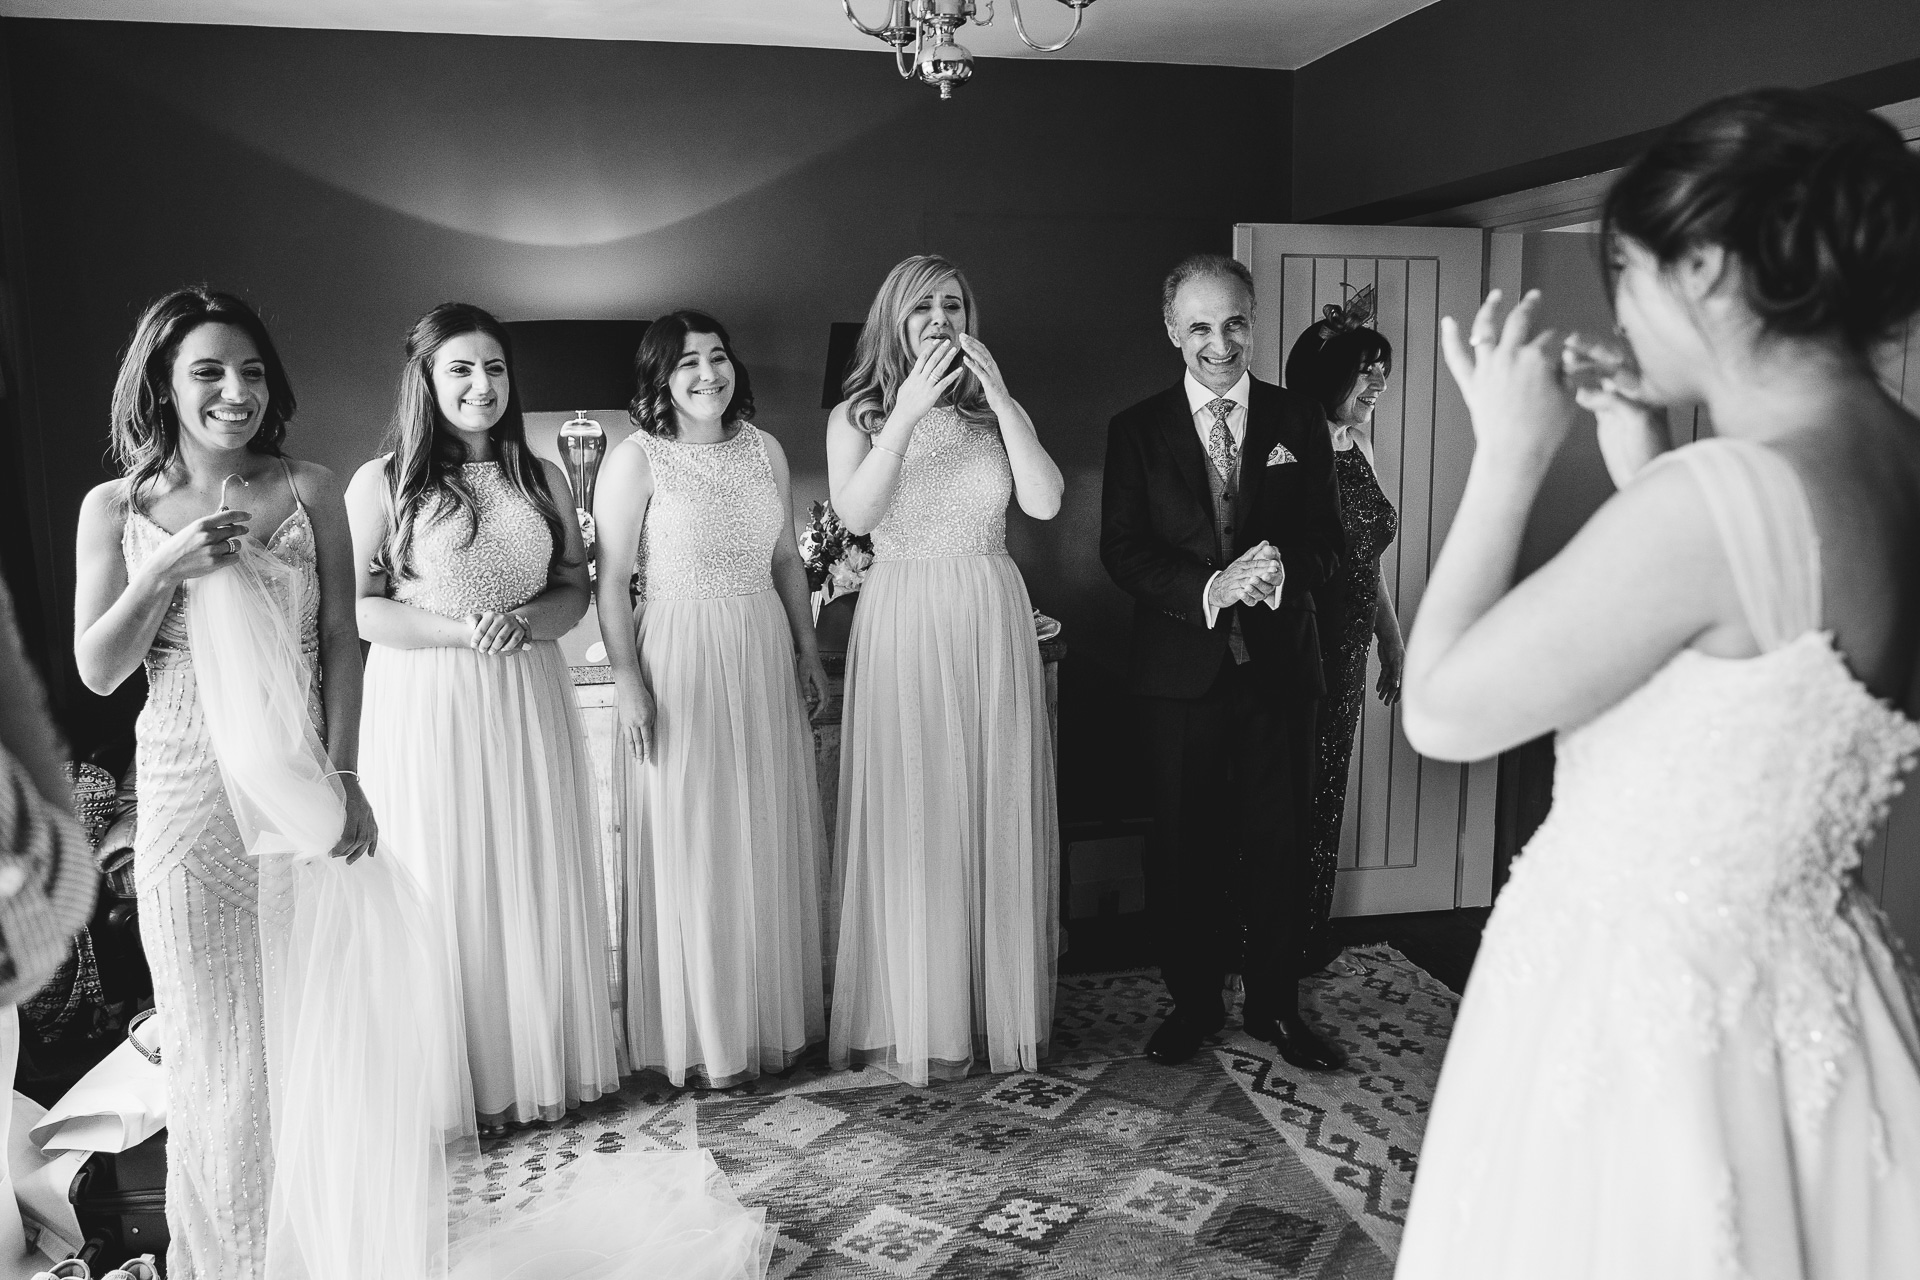 Group of people reacting to bride in wedding dress